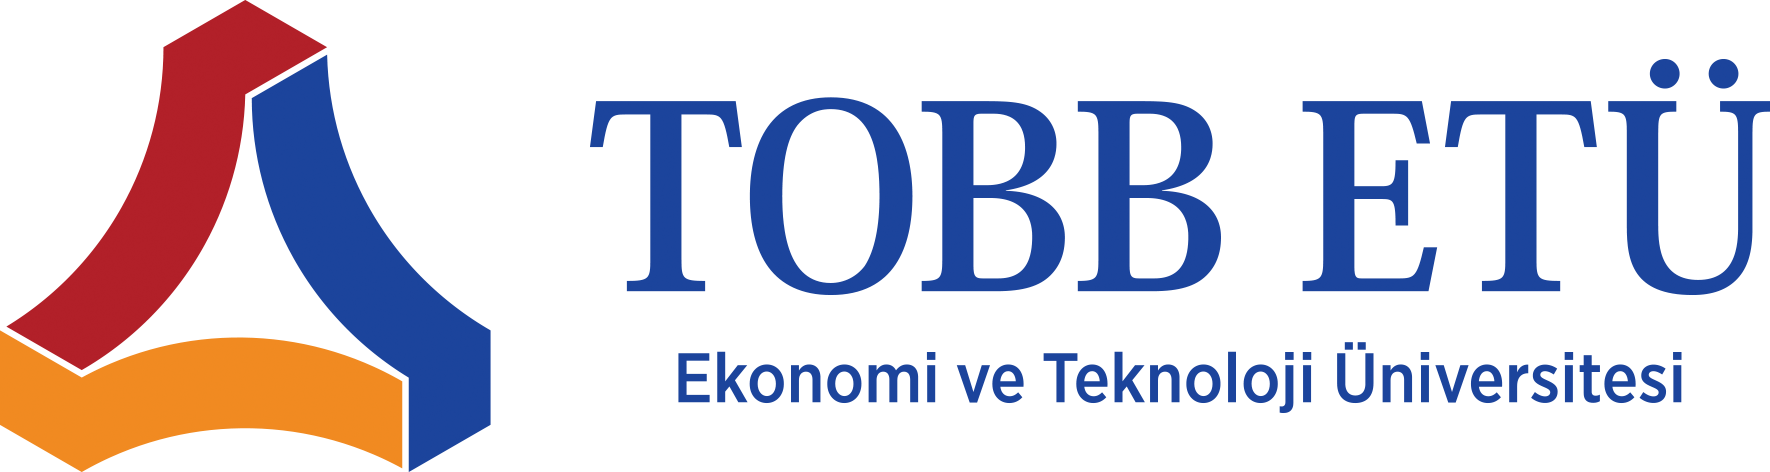 TOBB-1